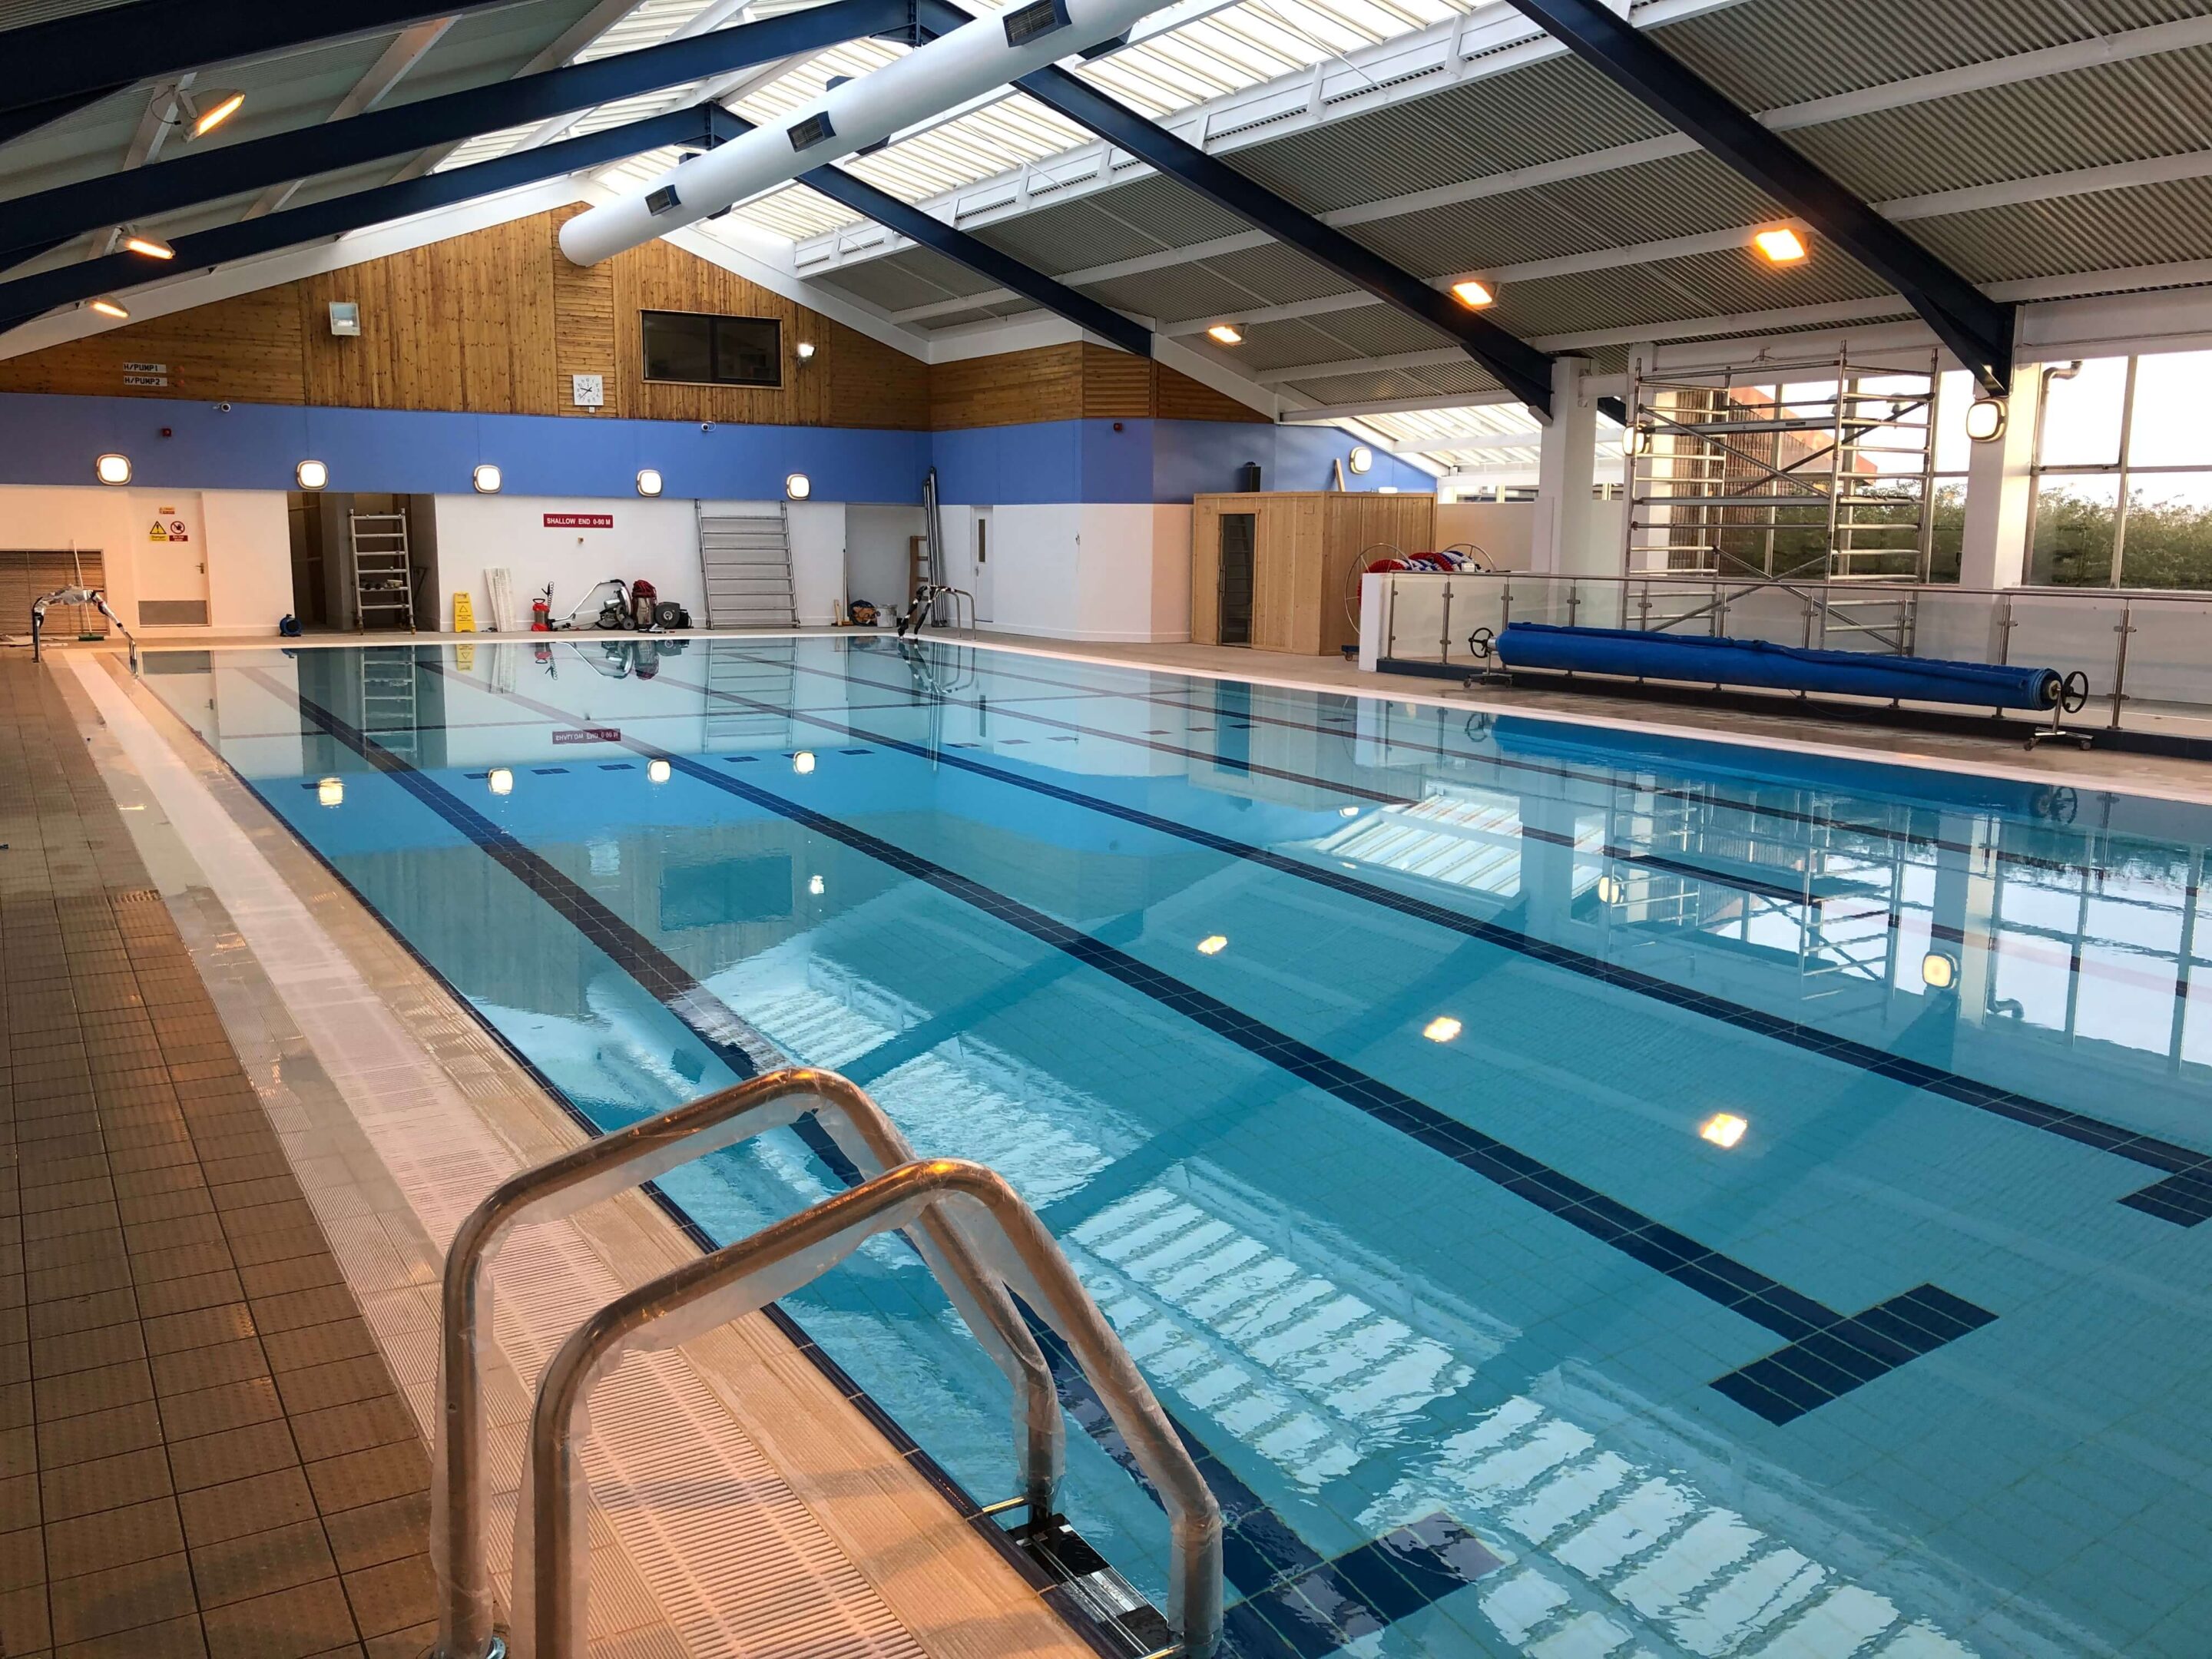 Community Swimming Pool Refurbishment in the Falkland Islands